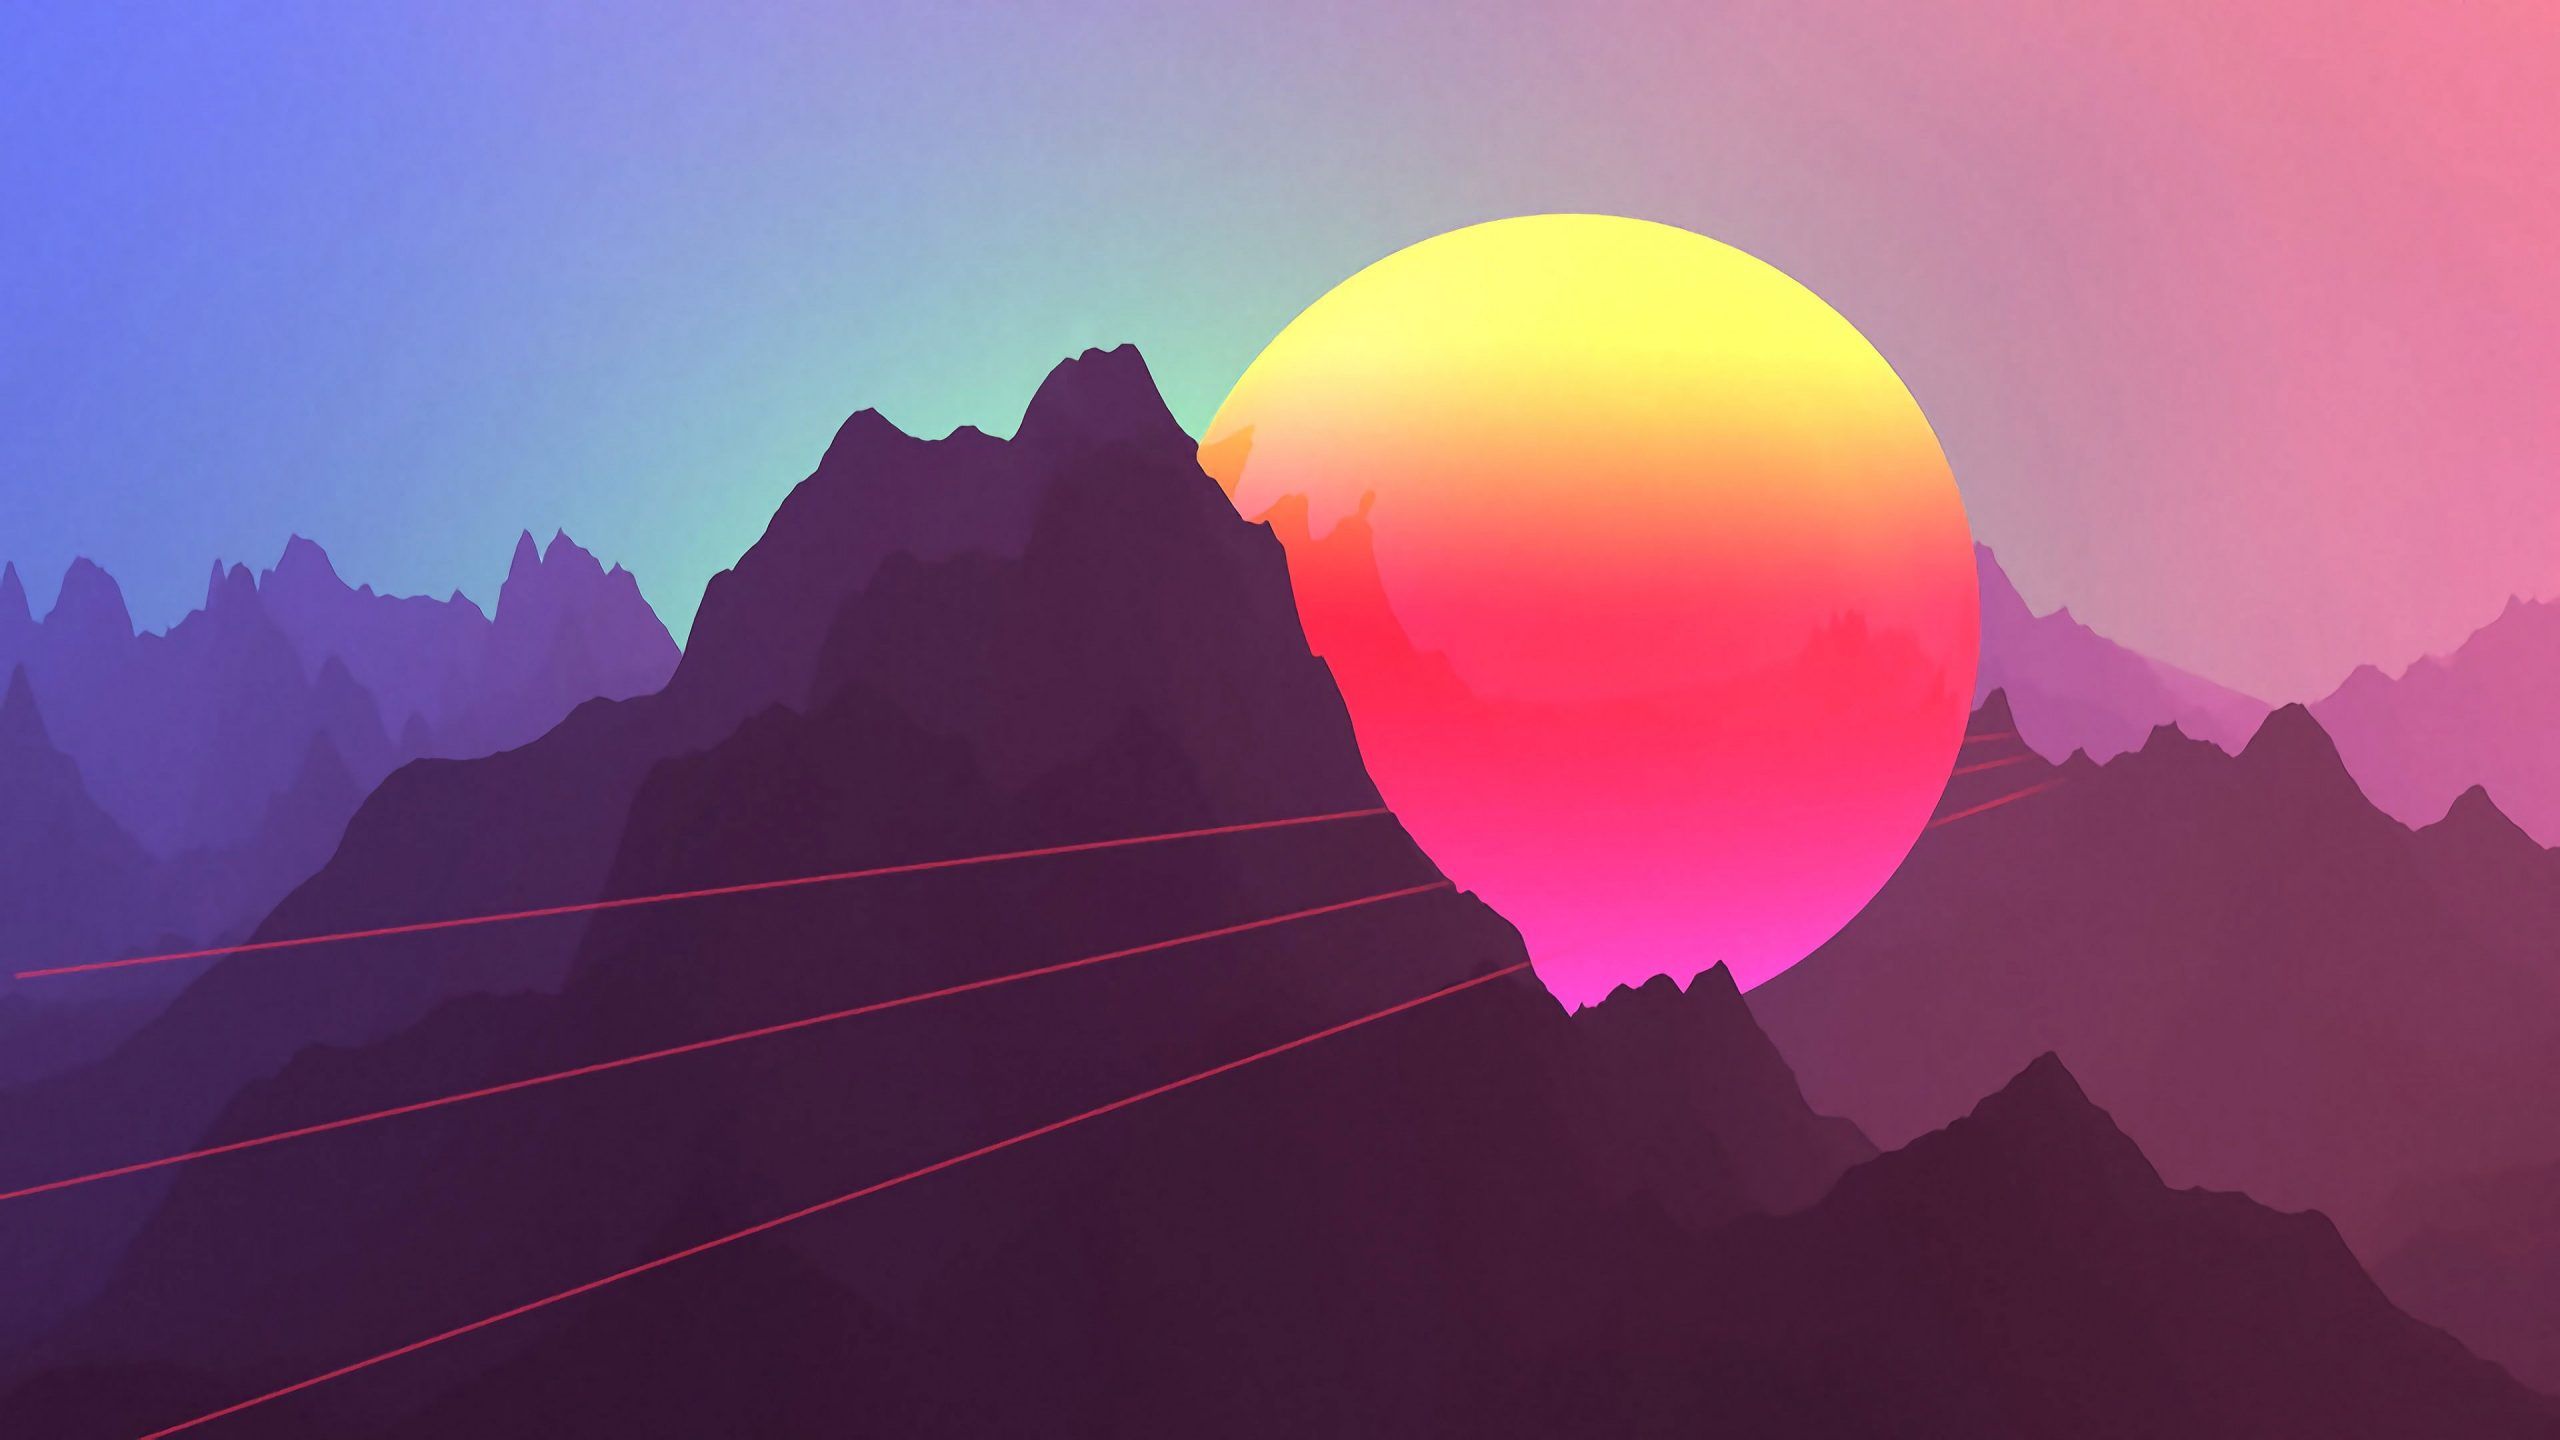 Mountains neon wallpaper, Retro style, sunset • Wallpaper For You HD Wallpaper For Desktop & Mobile